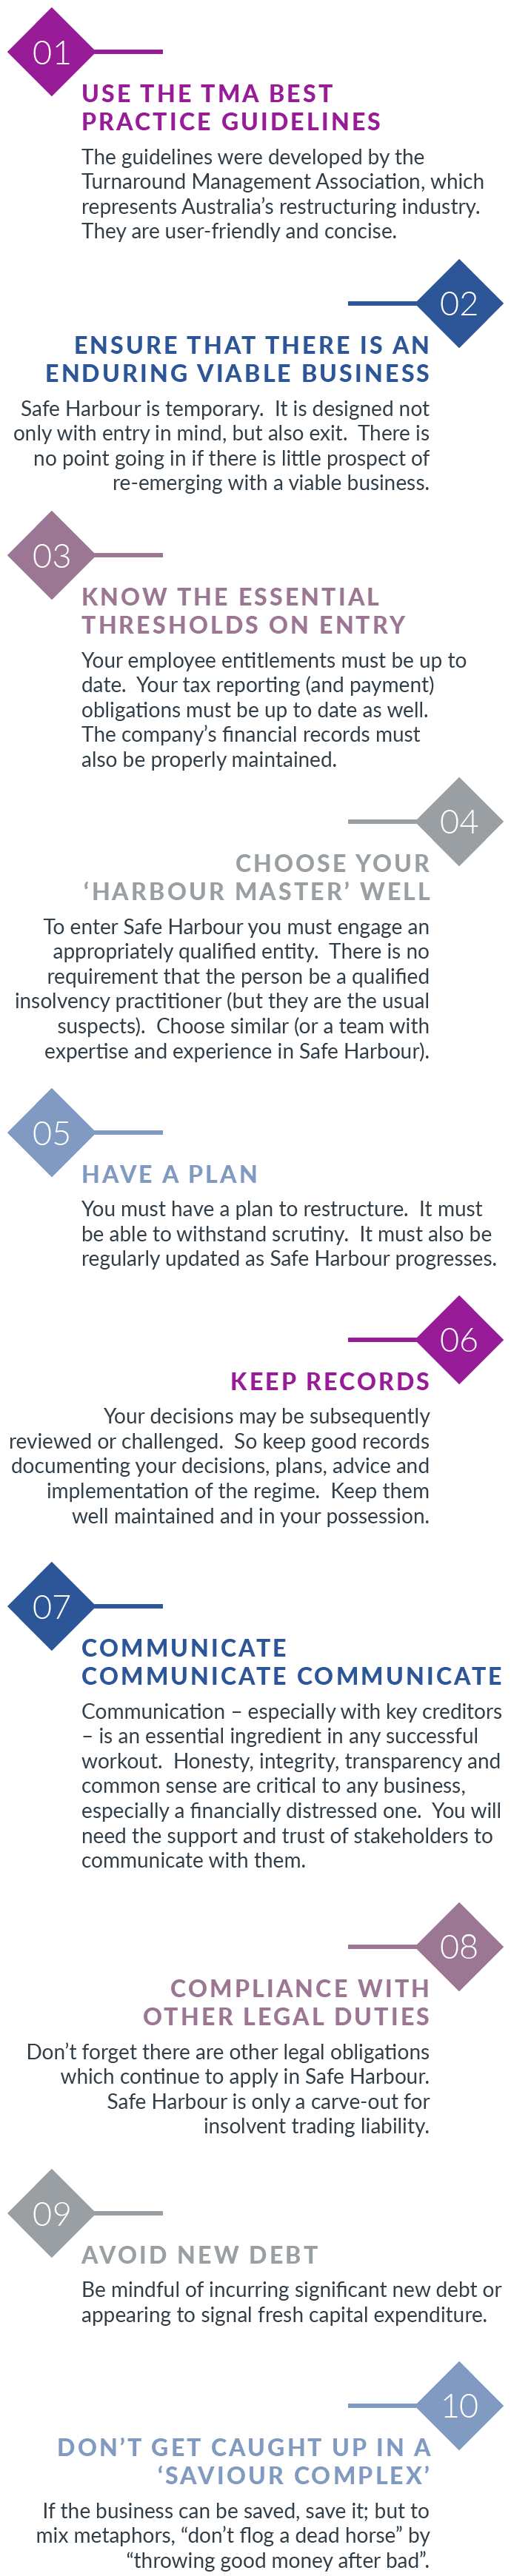 Online restructuring guide safe harbour top 10s